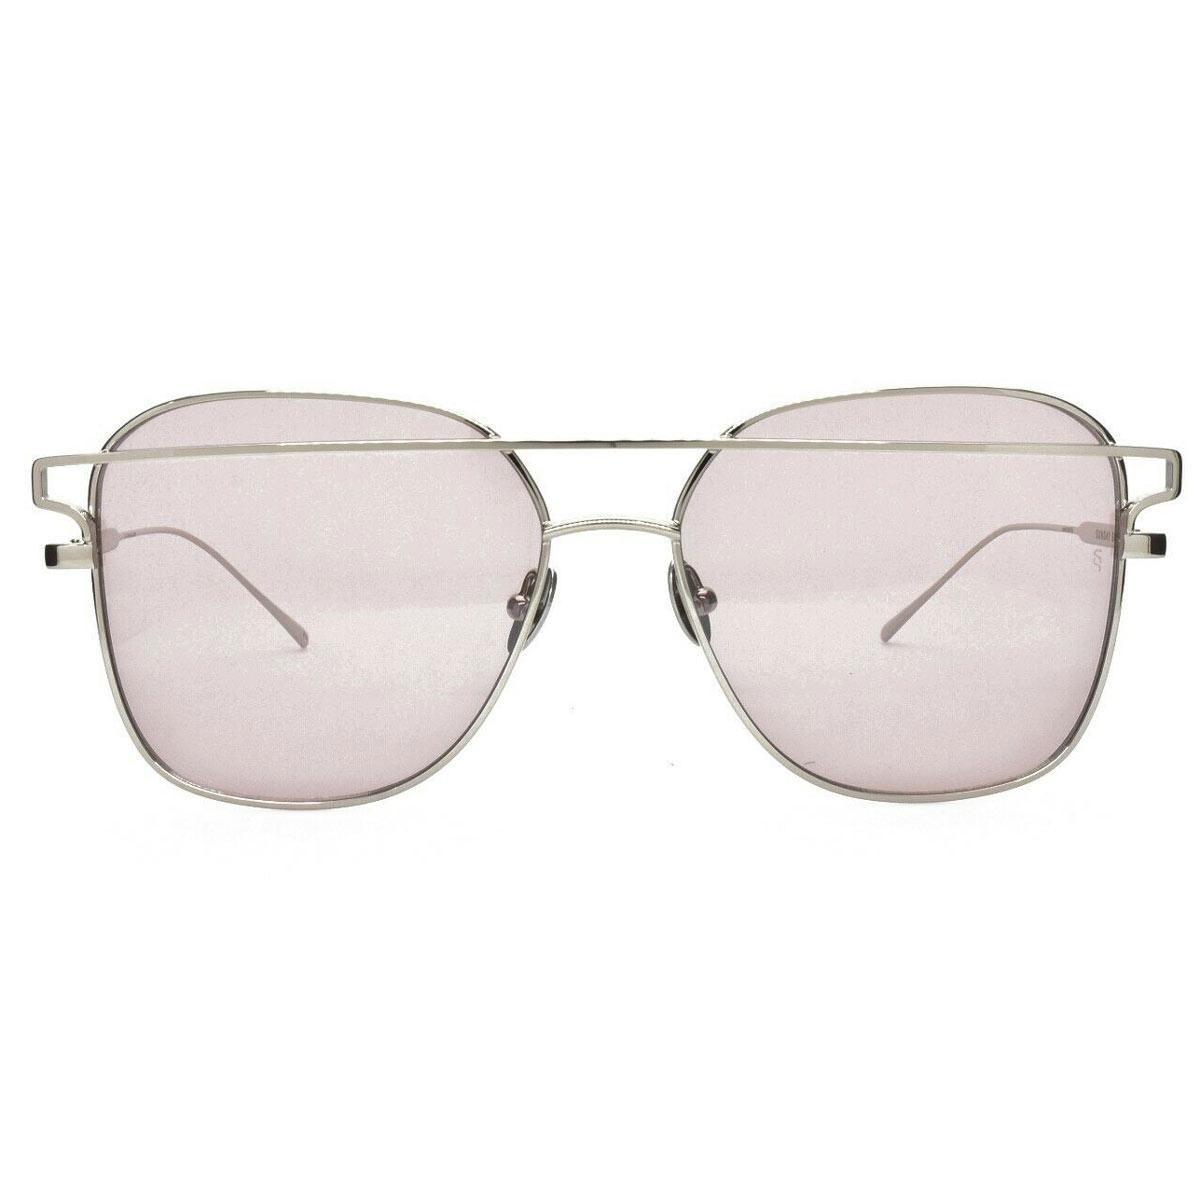 Sunday Somewhere JESSE-SIL Women's Jesse Silver Frame Sunglasses - image 3 of 5